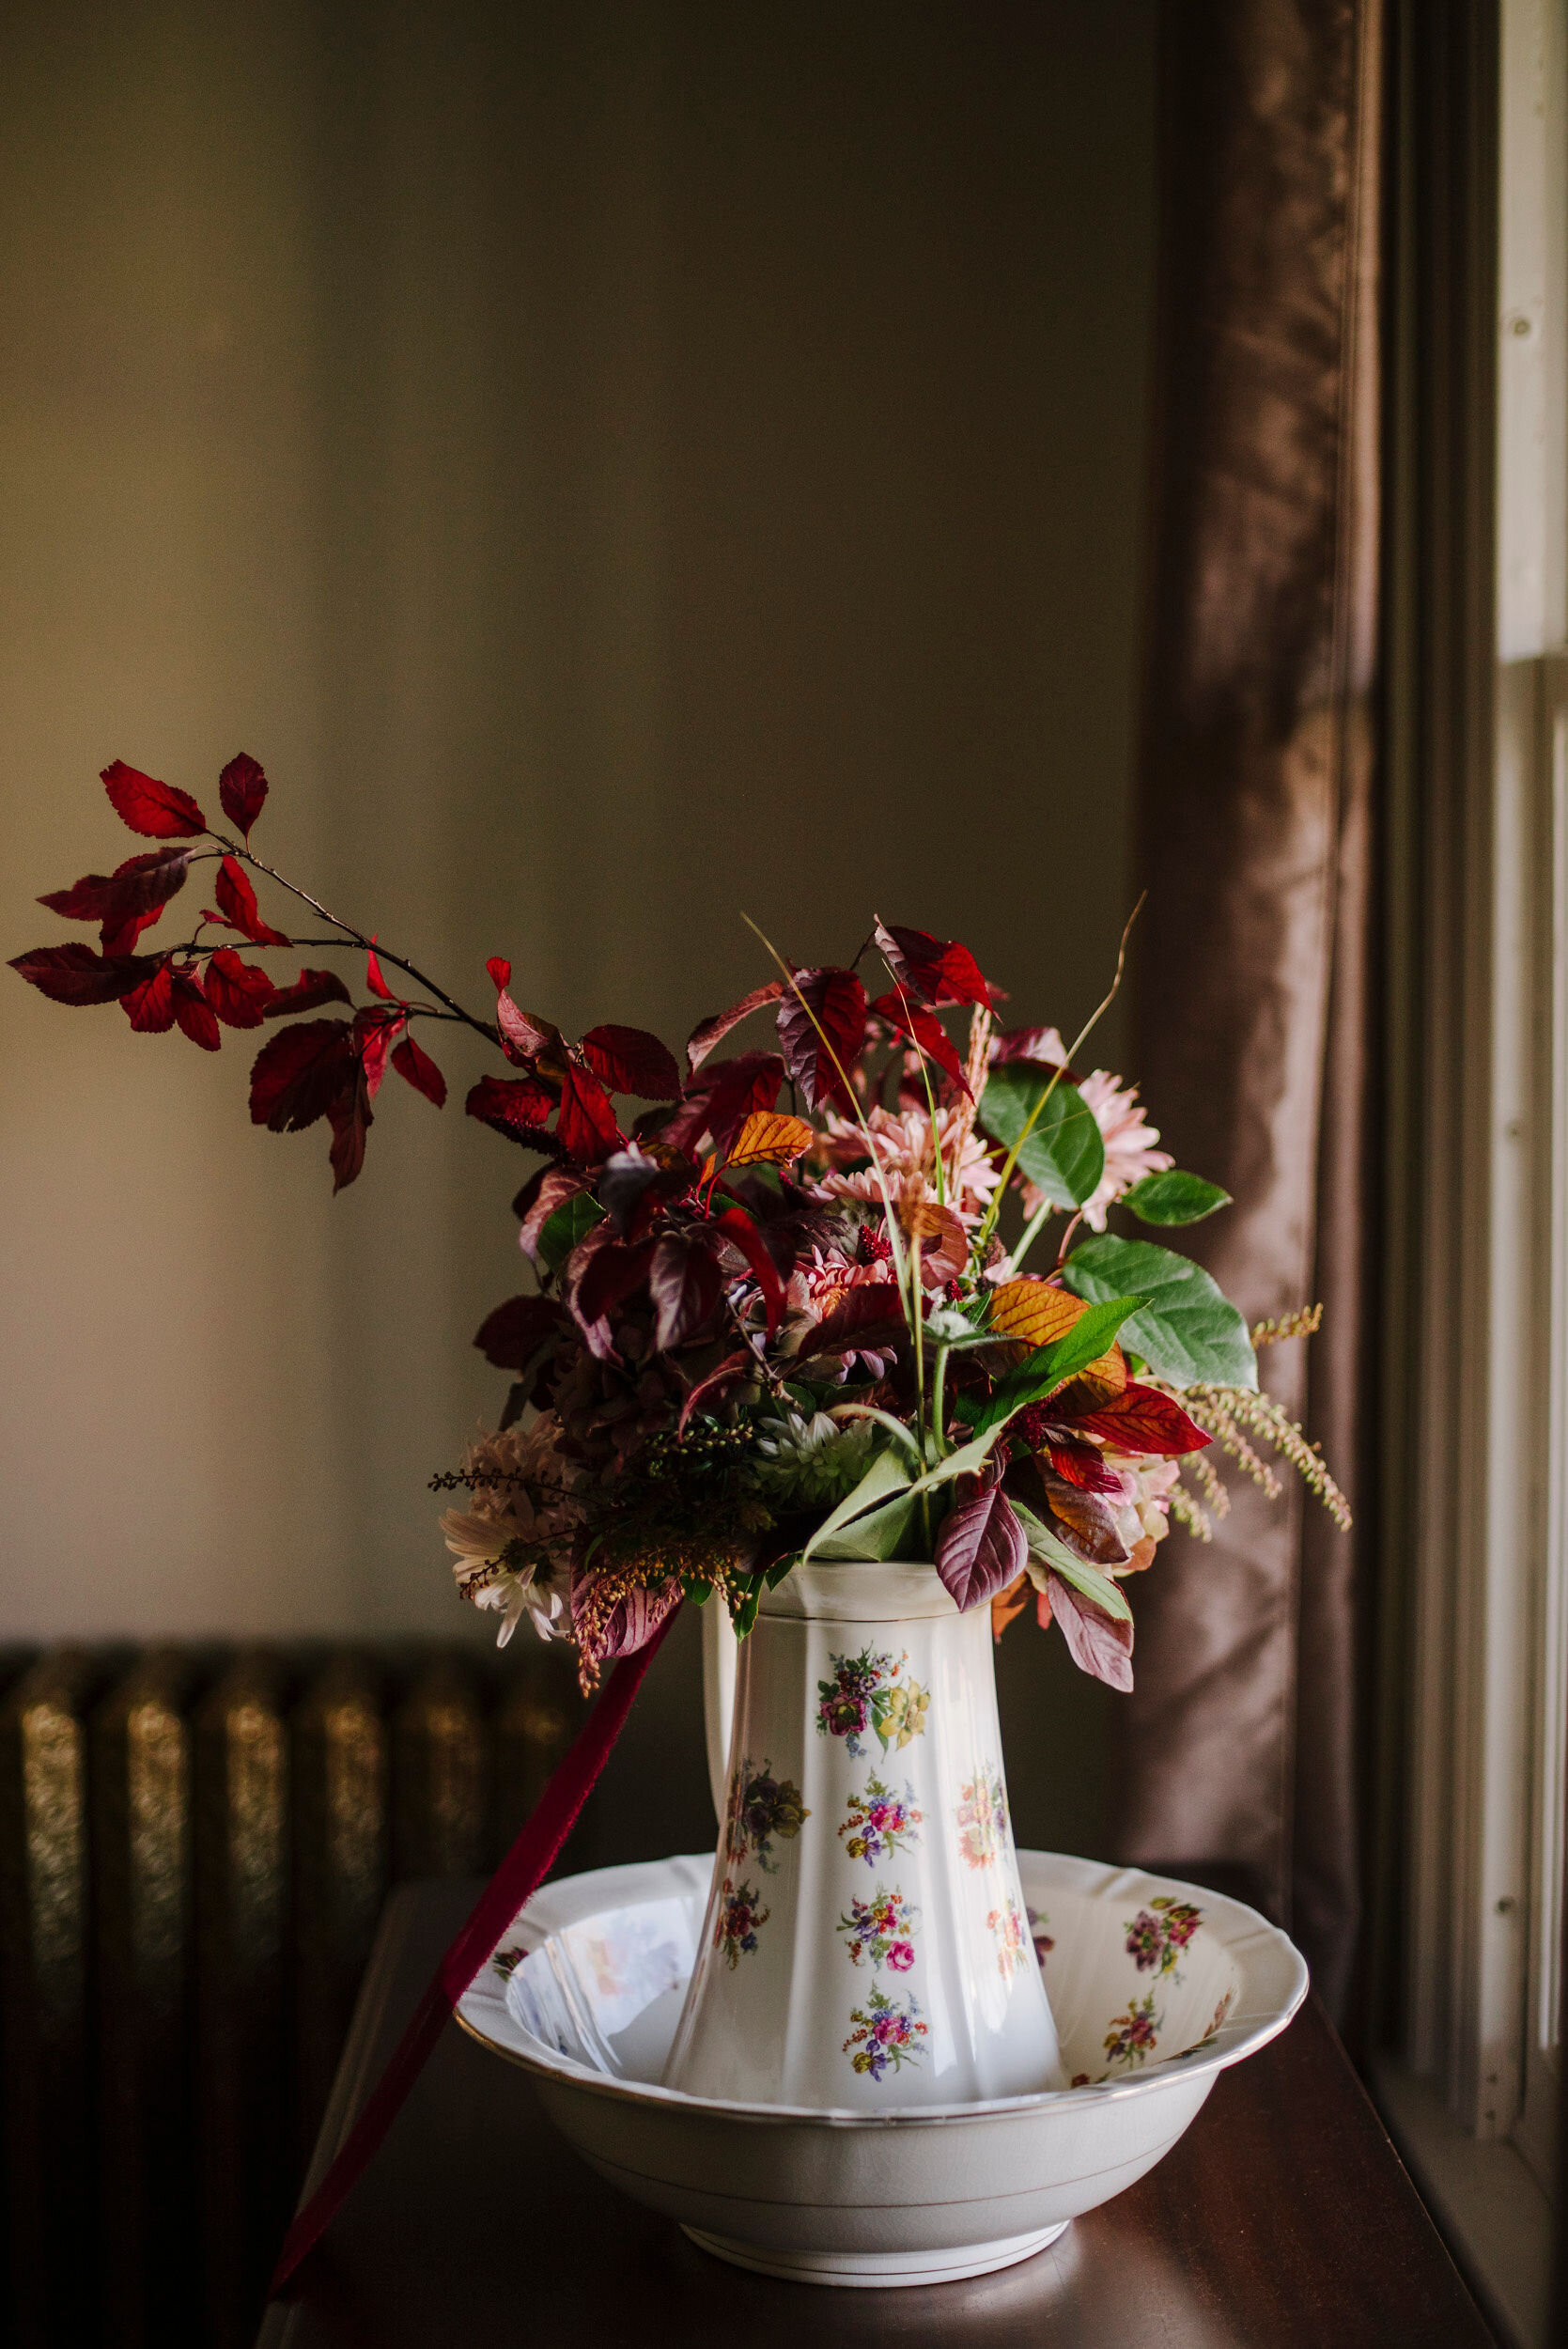 Autumn wedding bouquet by Lexi Mara at Fort Worden